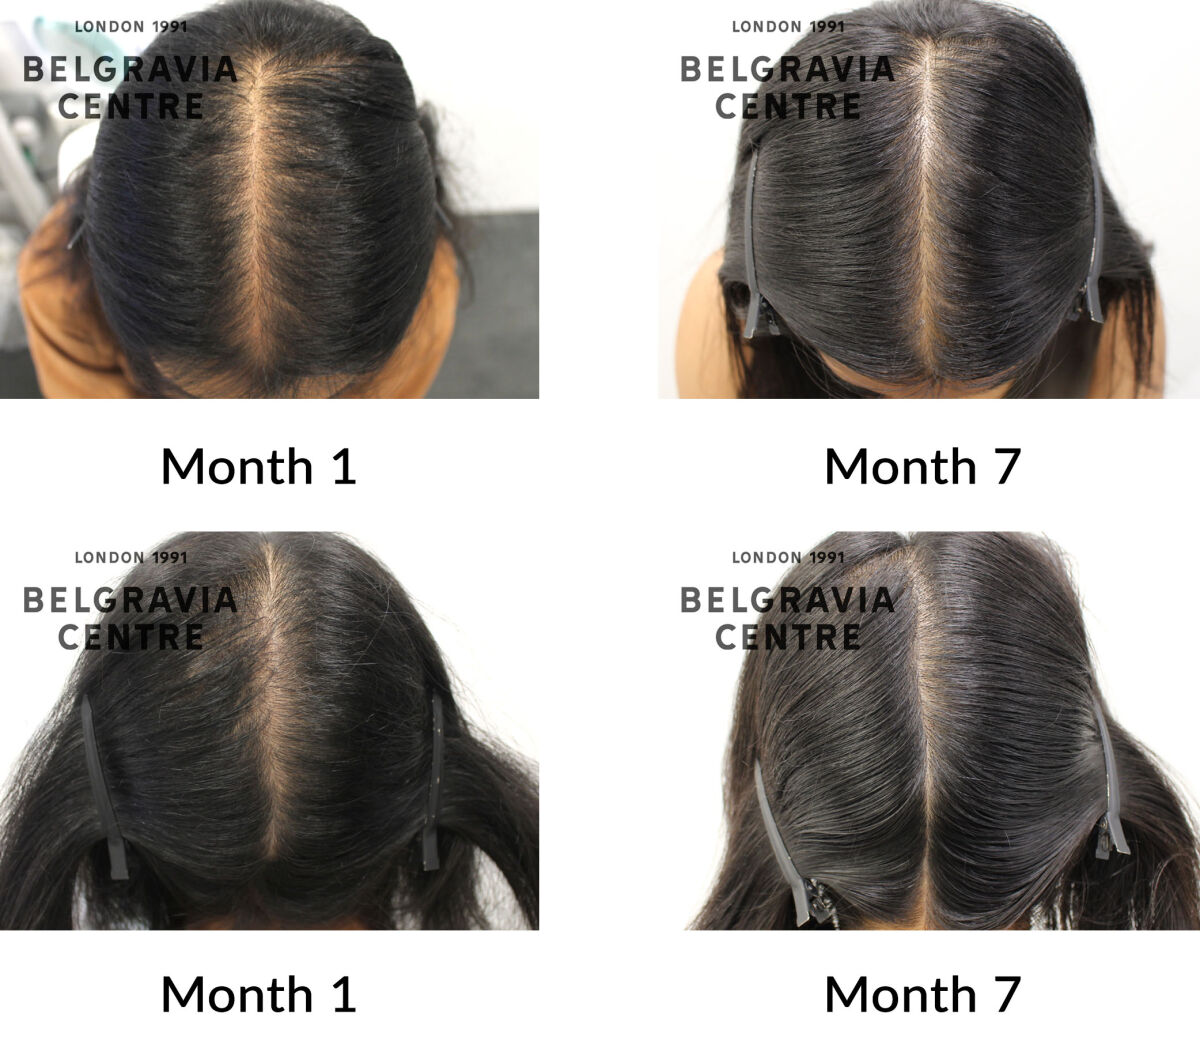 female pattern hair loss the belgravia centre 430915